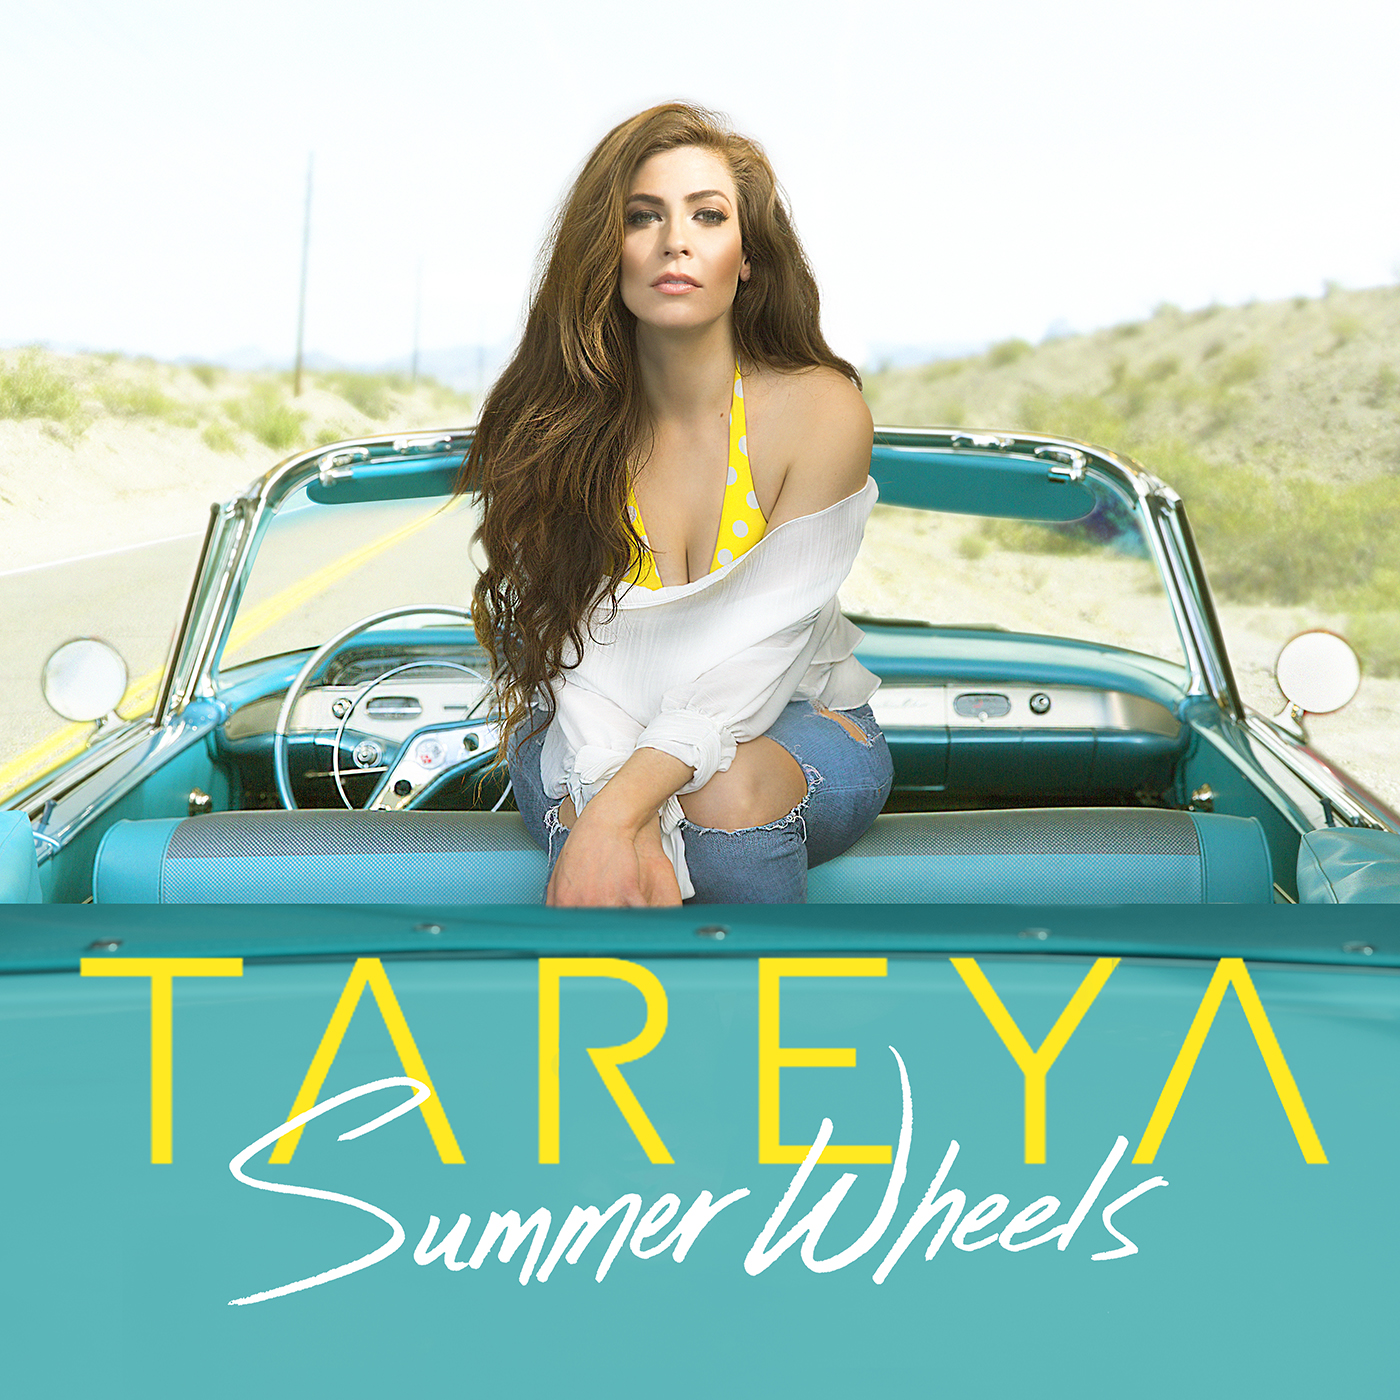 tareya-summerwheels-single-art-1400x1400-phil-crozier-2017.jpg